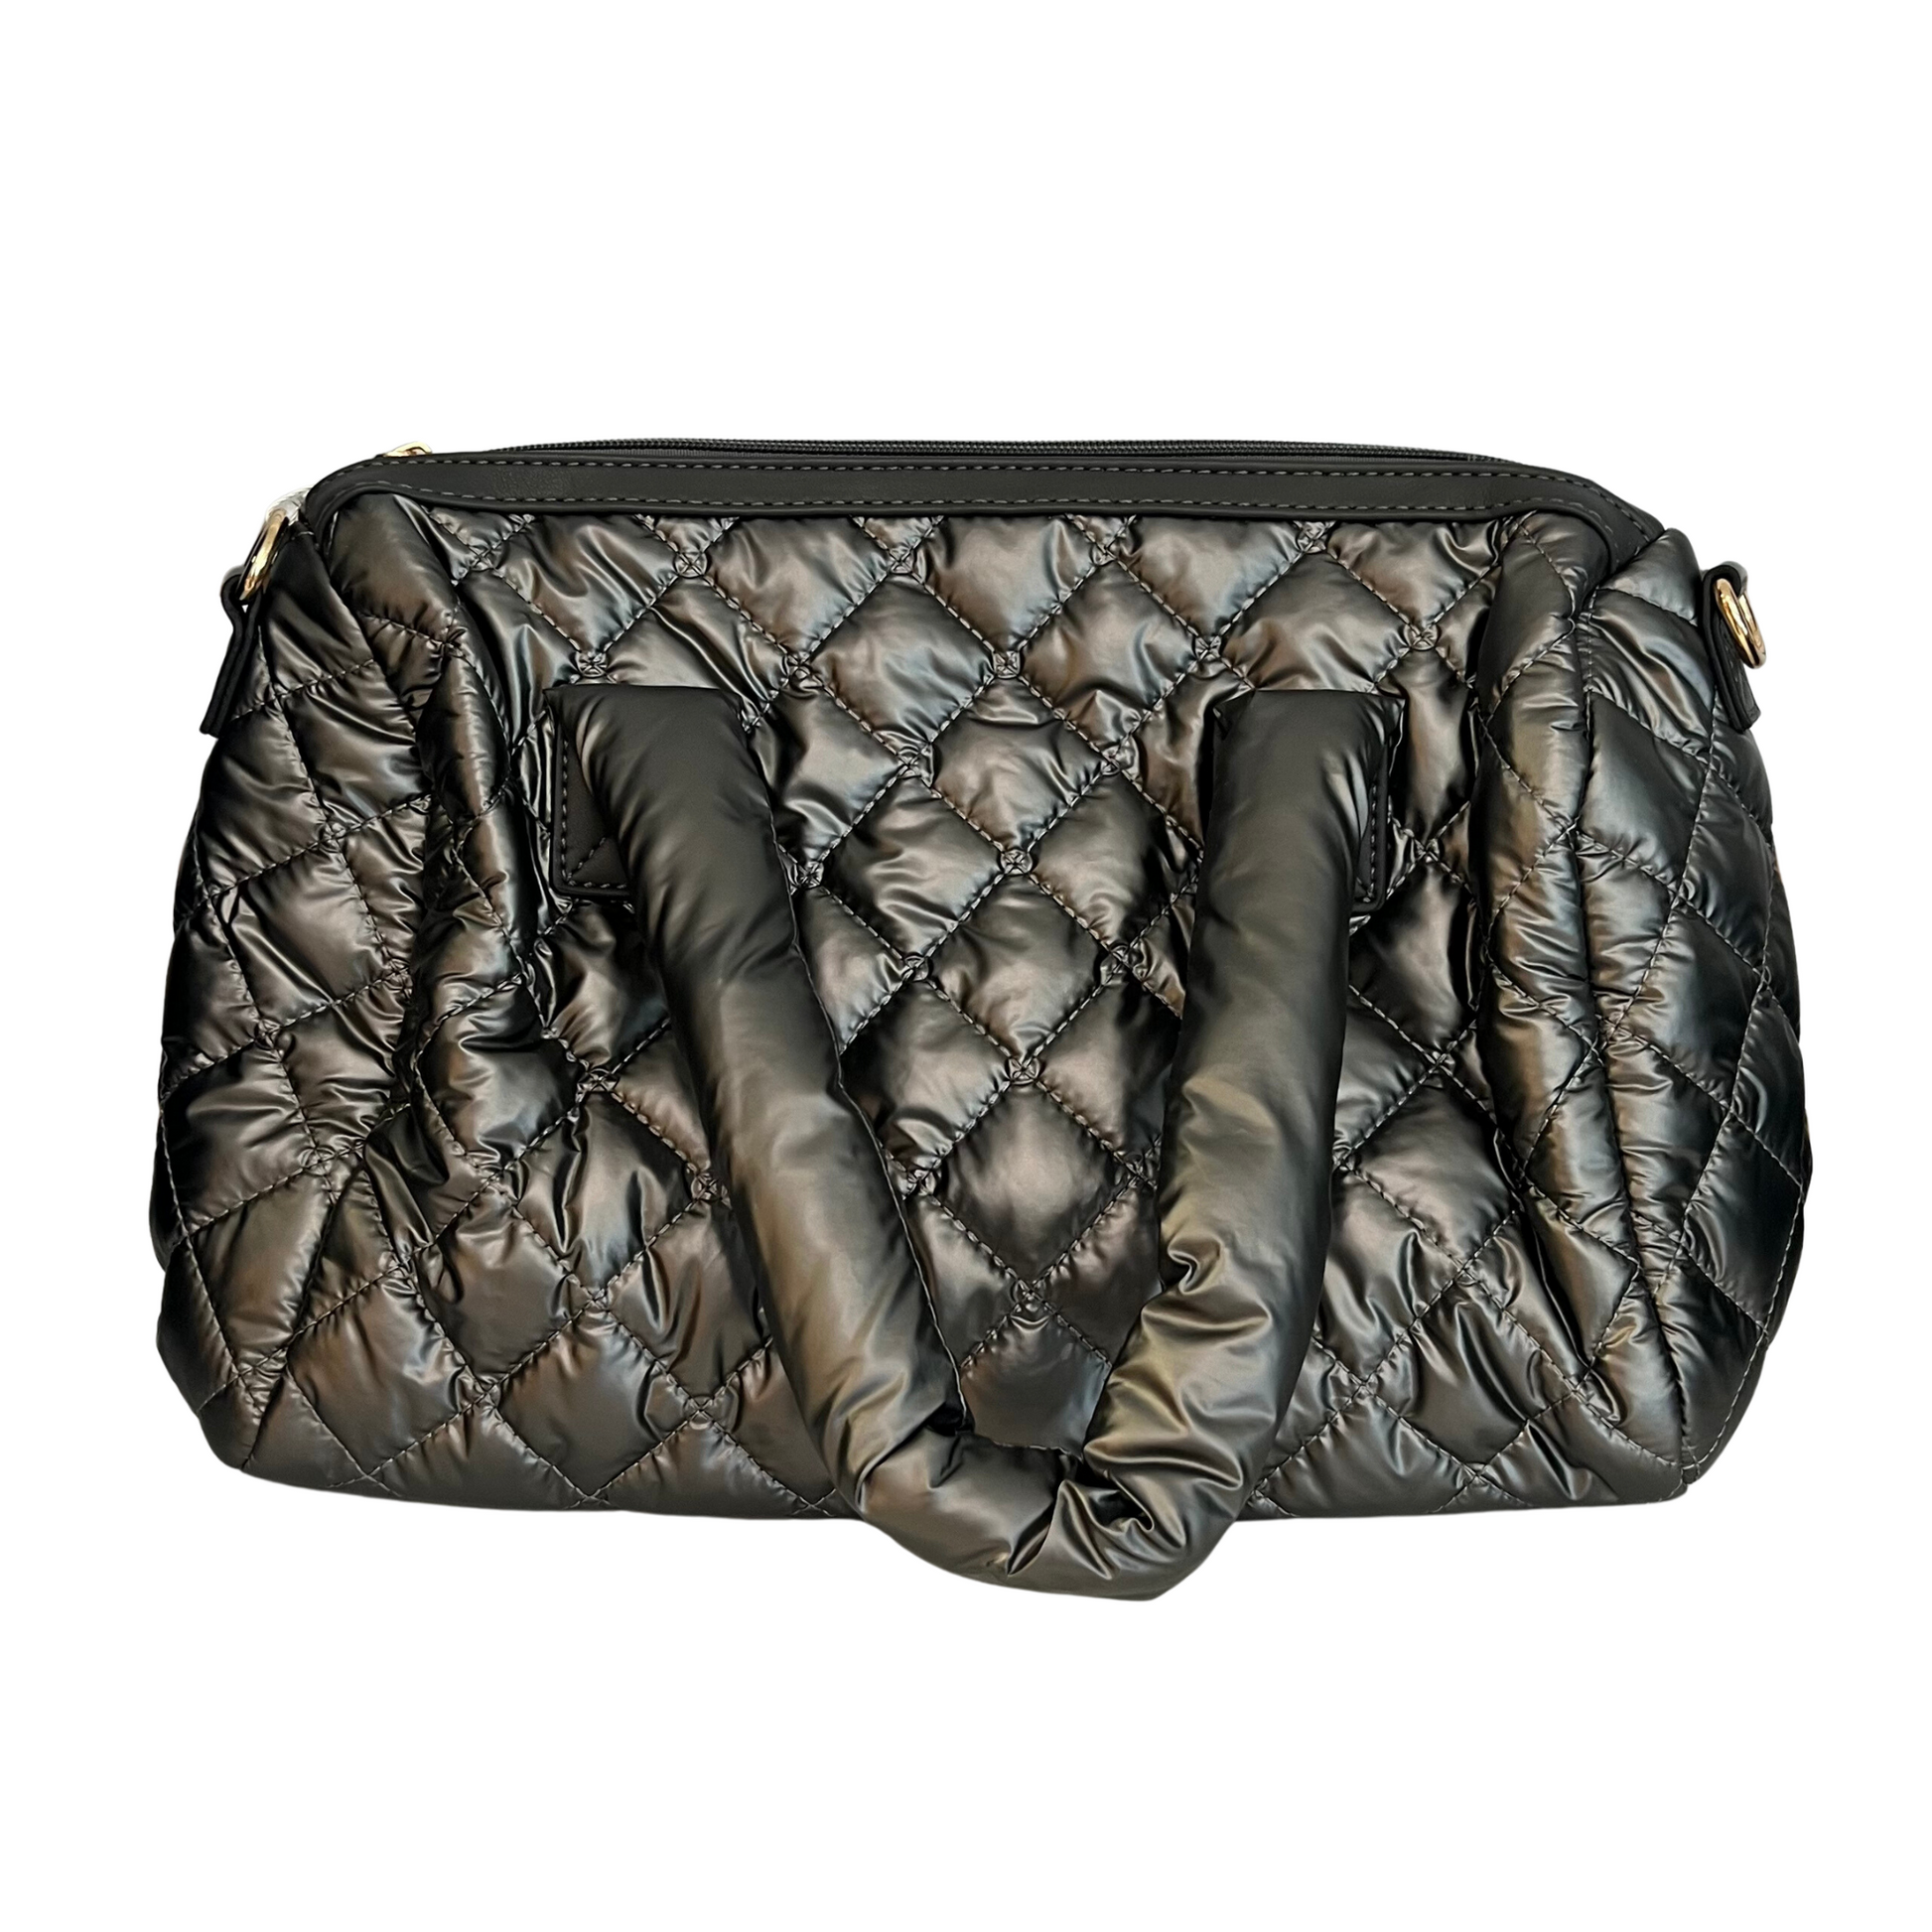 Trista handbag in gunmetal grey